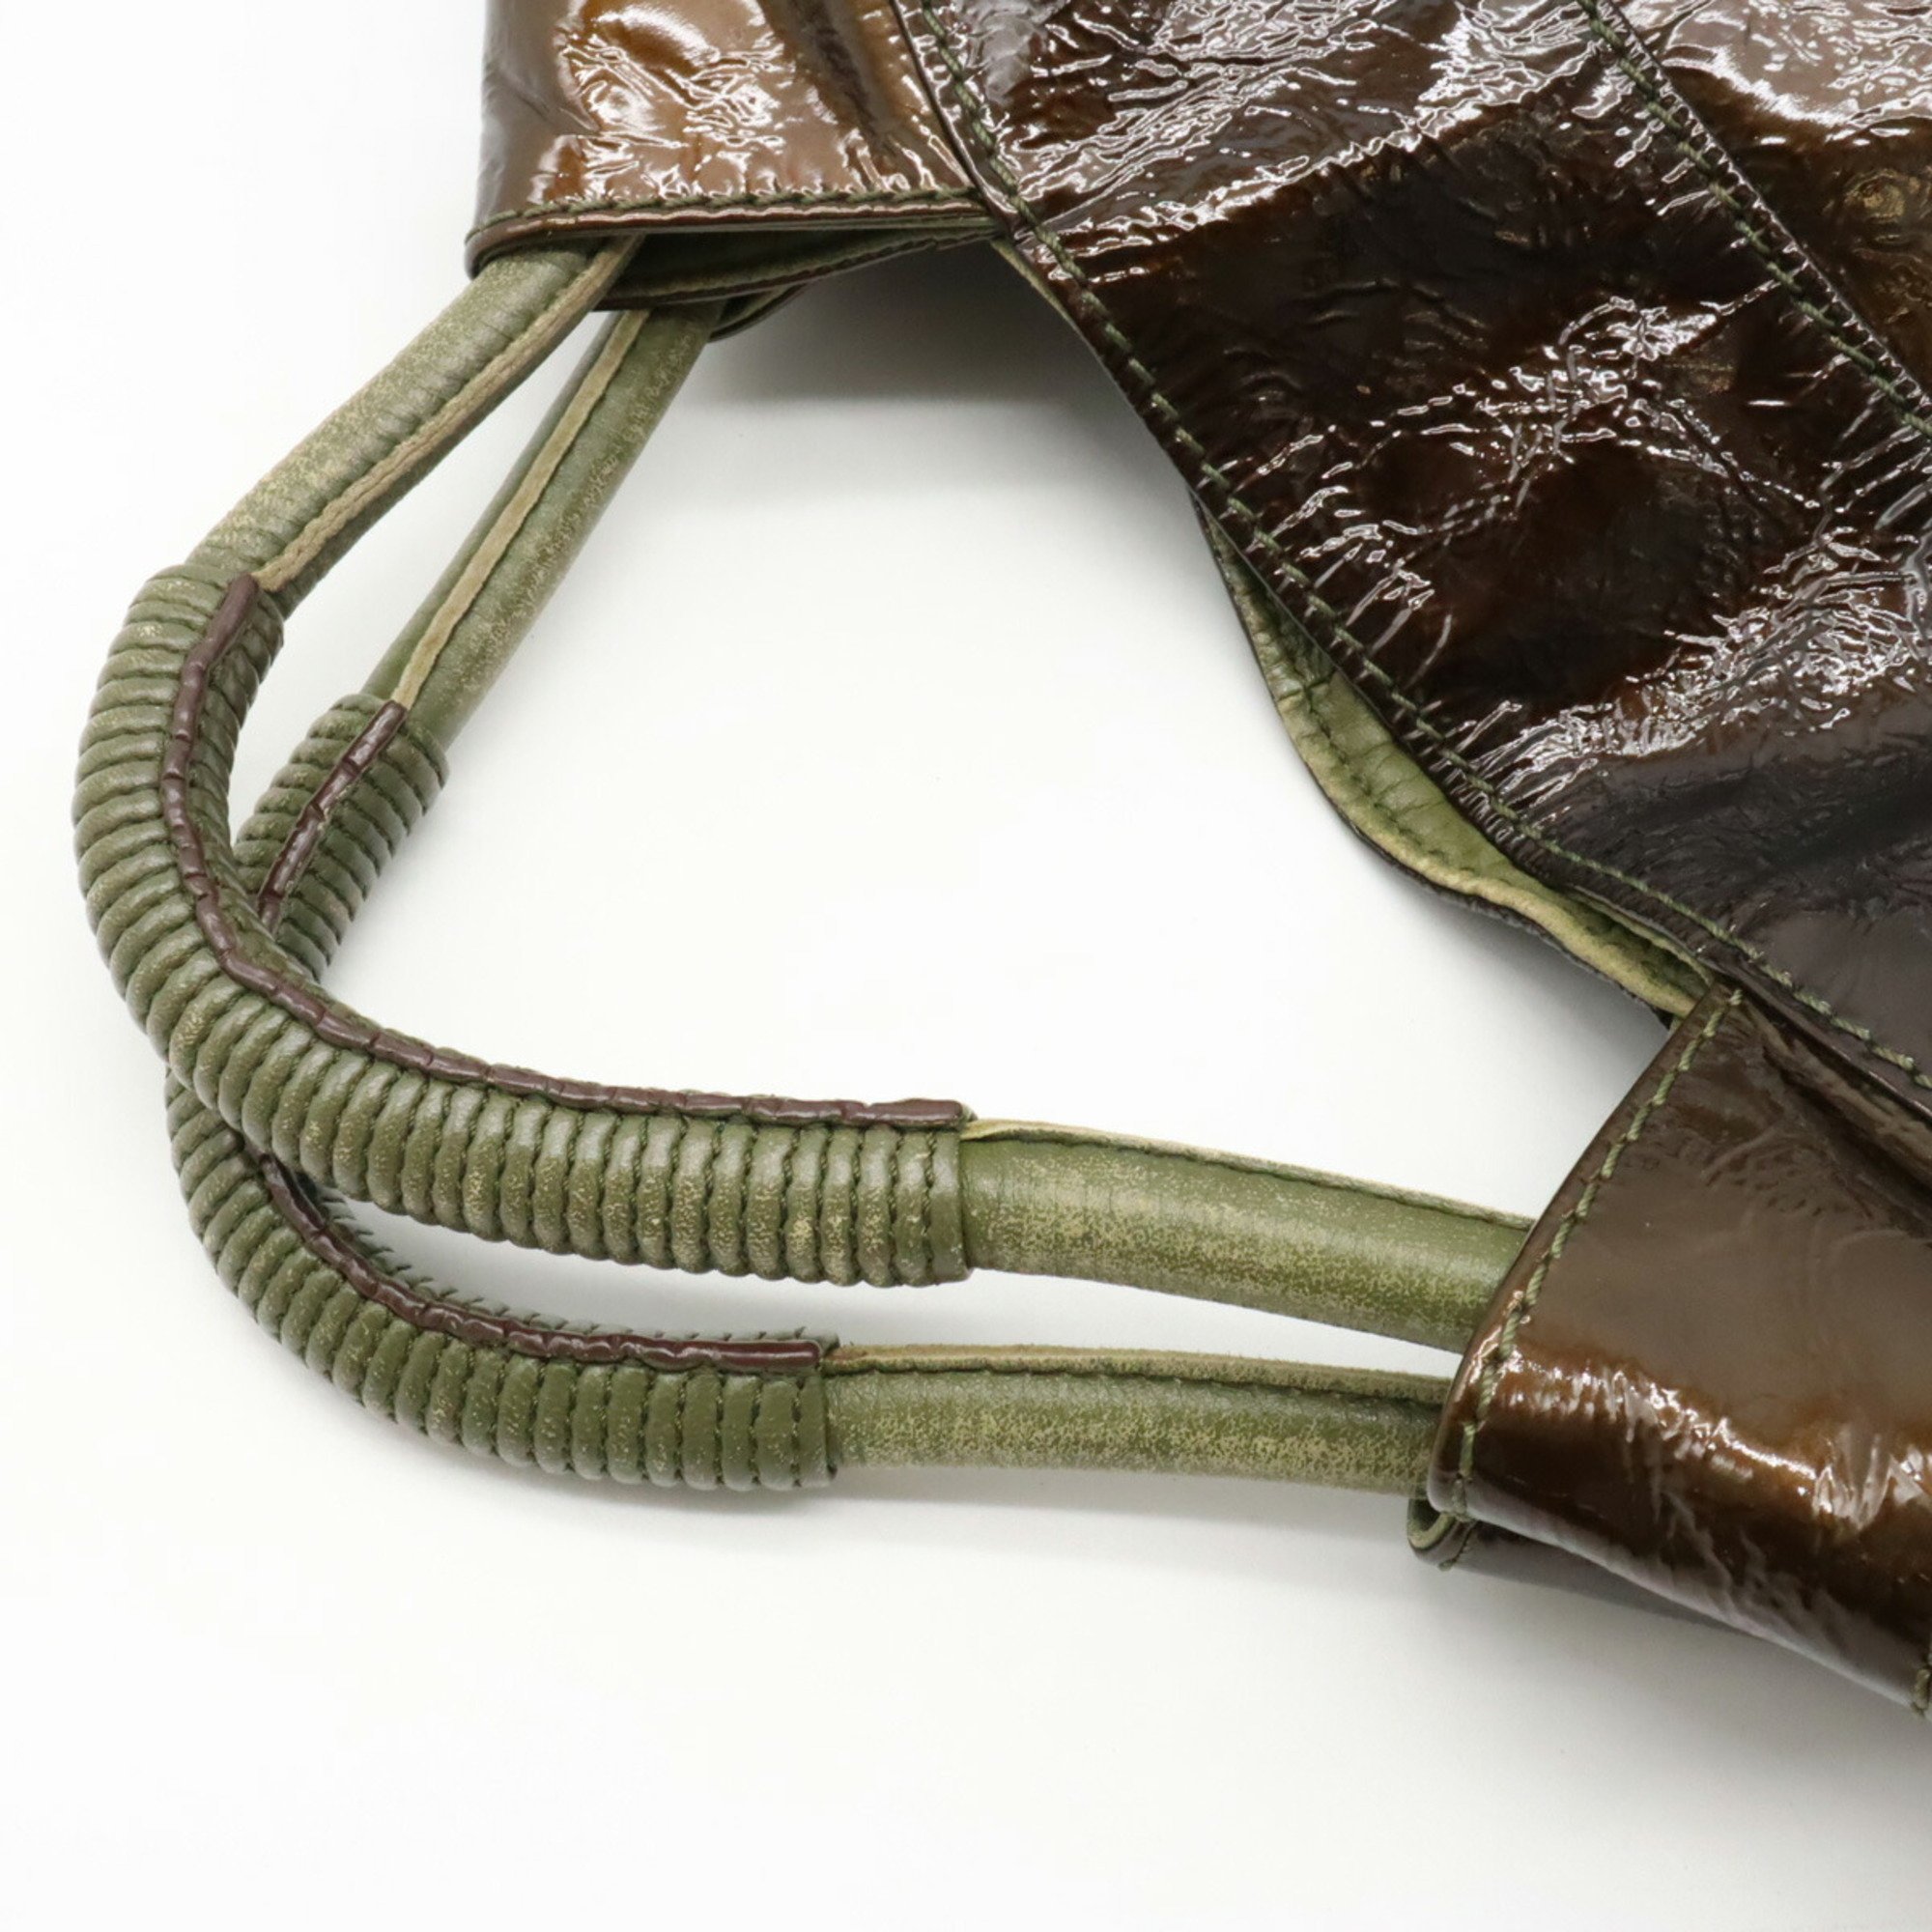 LOEWE Nappa Aire handbag patent leather enamel dark brown khaki